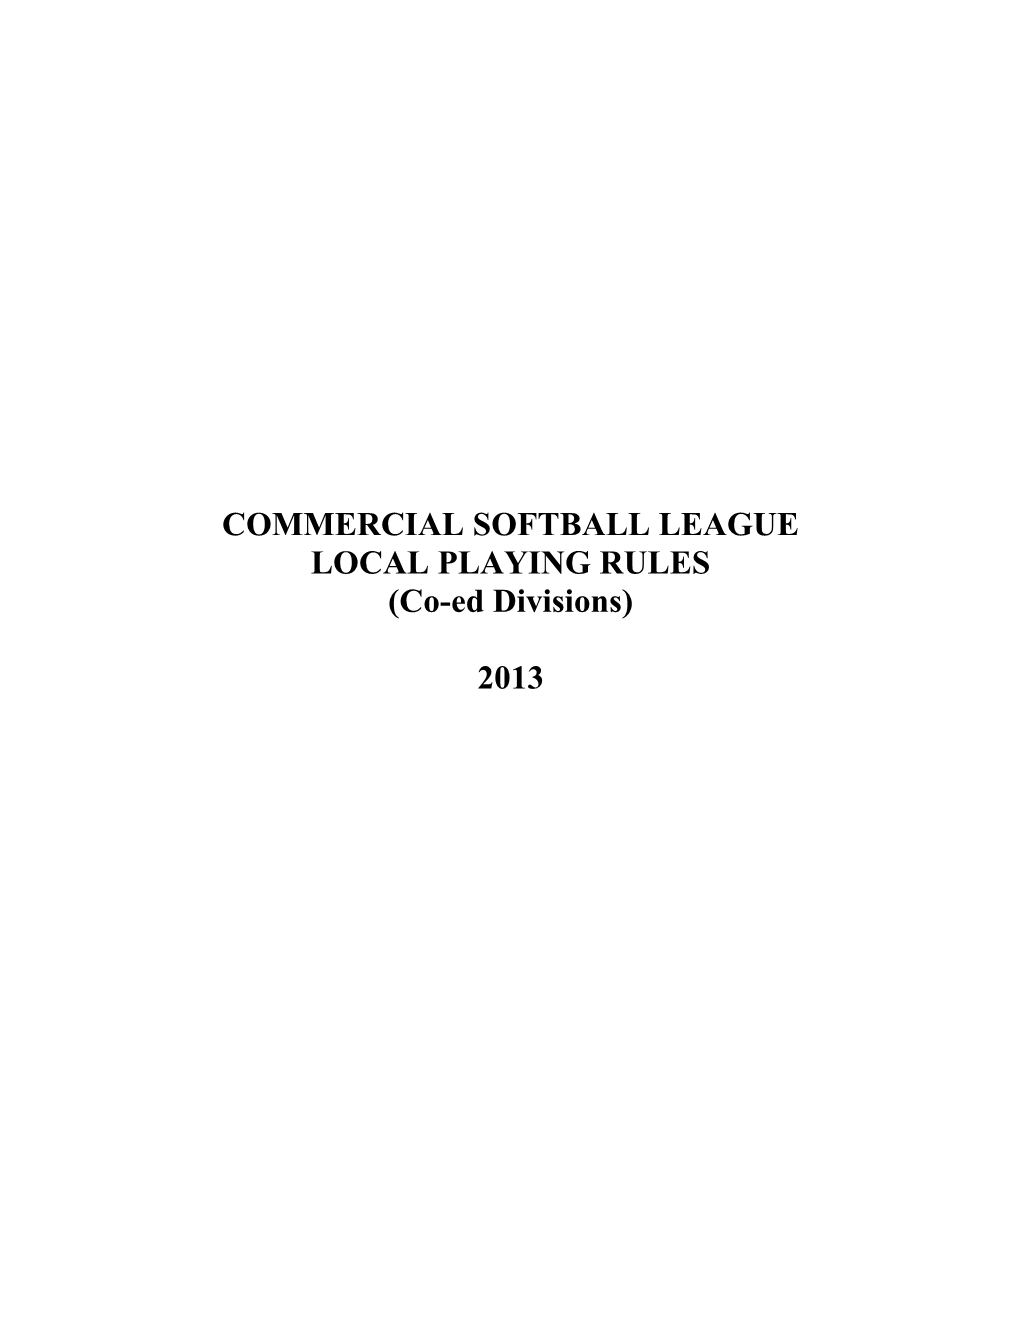 Commercial Softball League